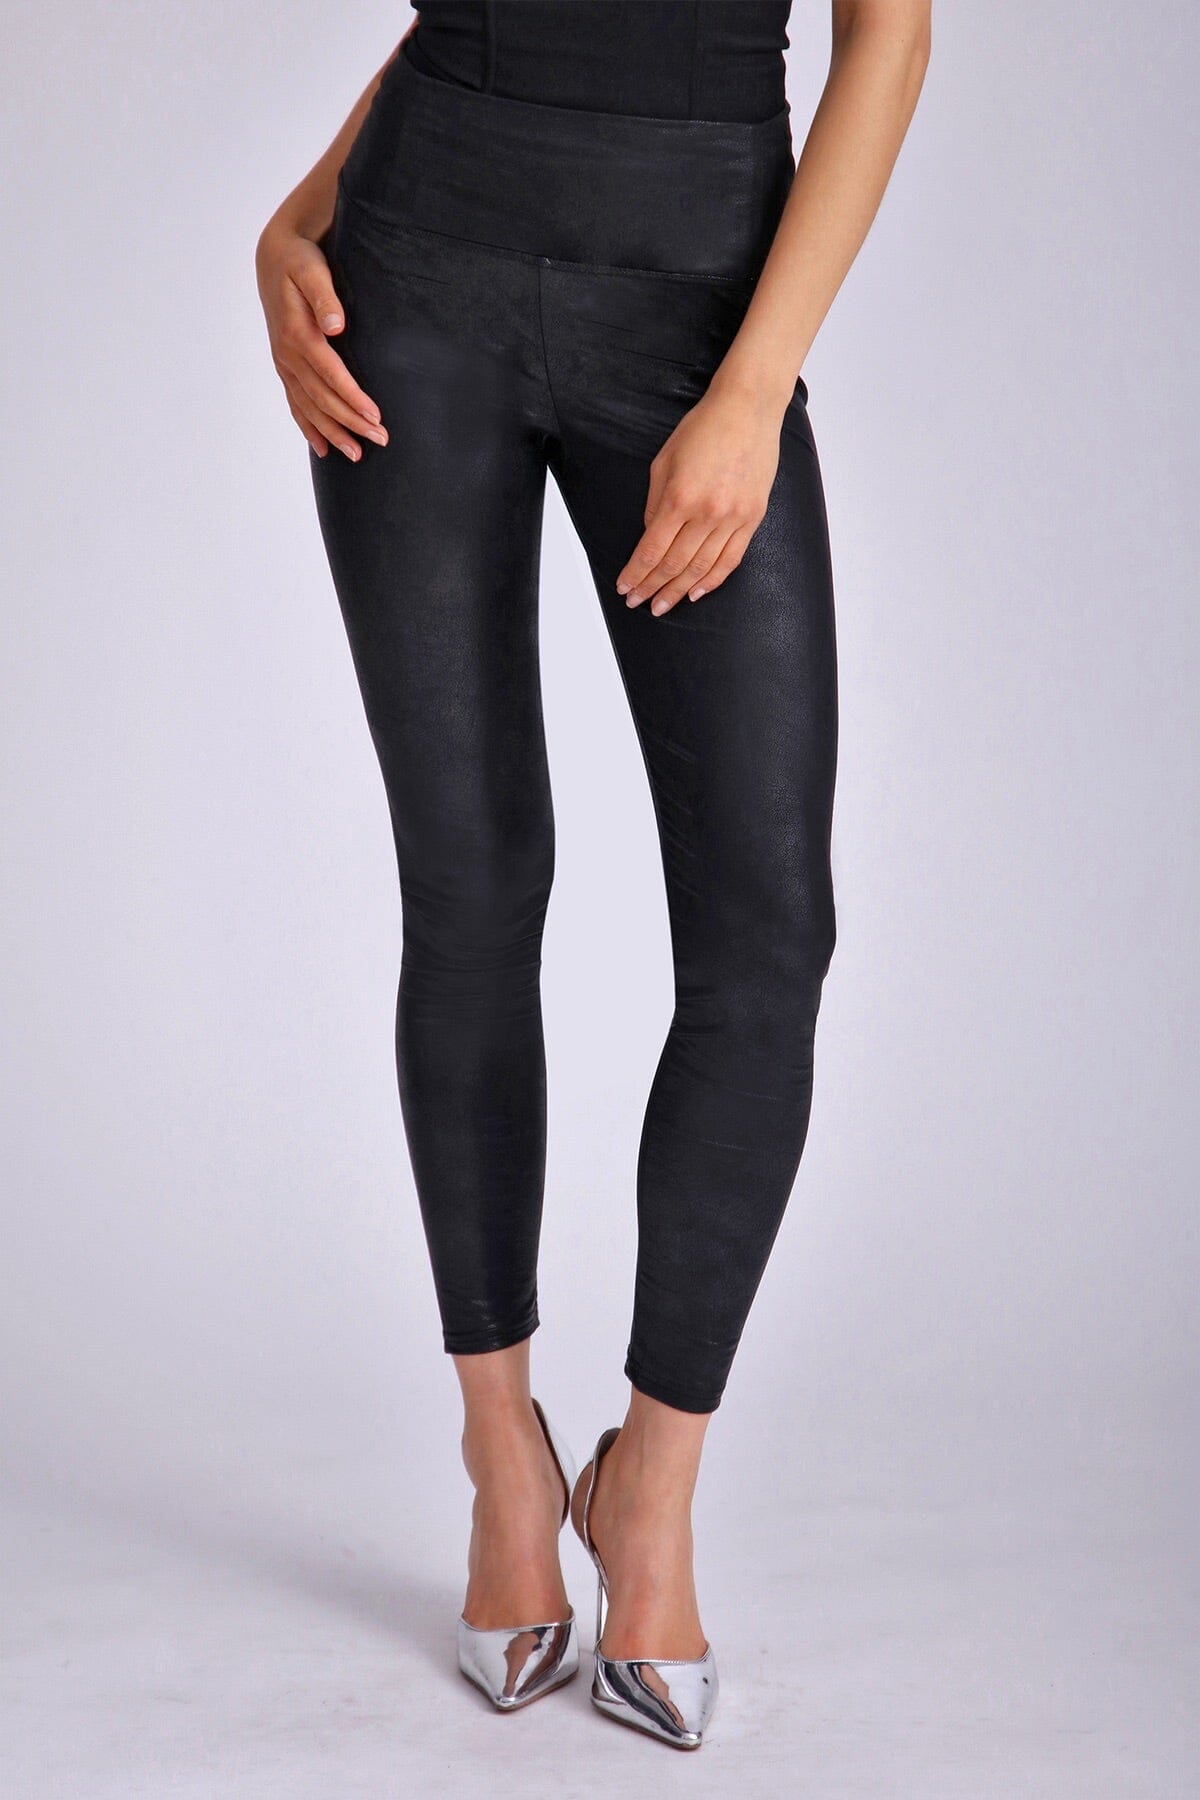 Black crackle faux leather legging pants bagatelle - figure flattering leggings for ladies